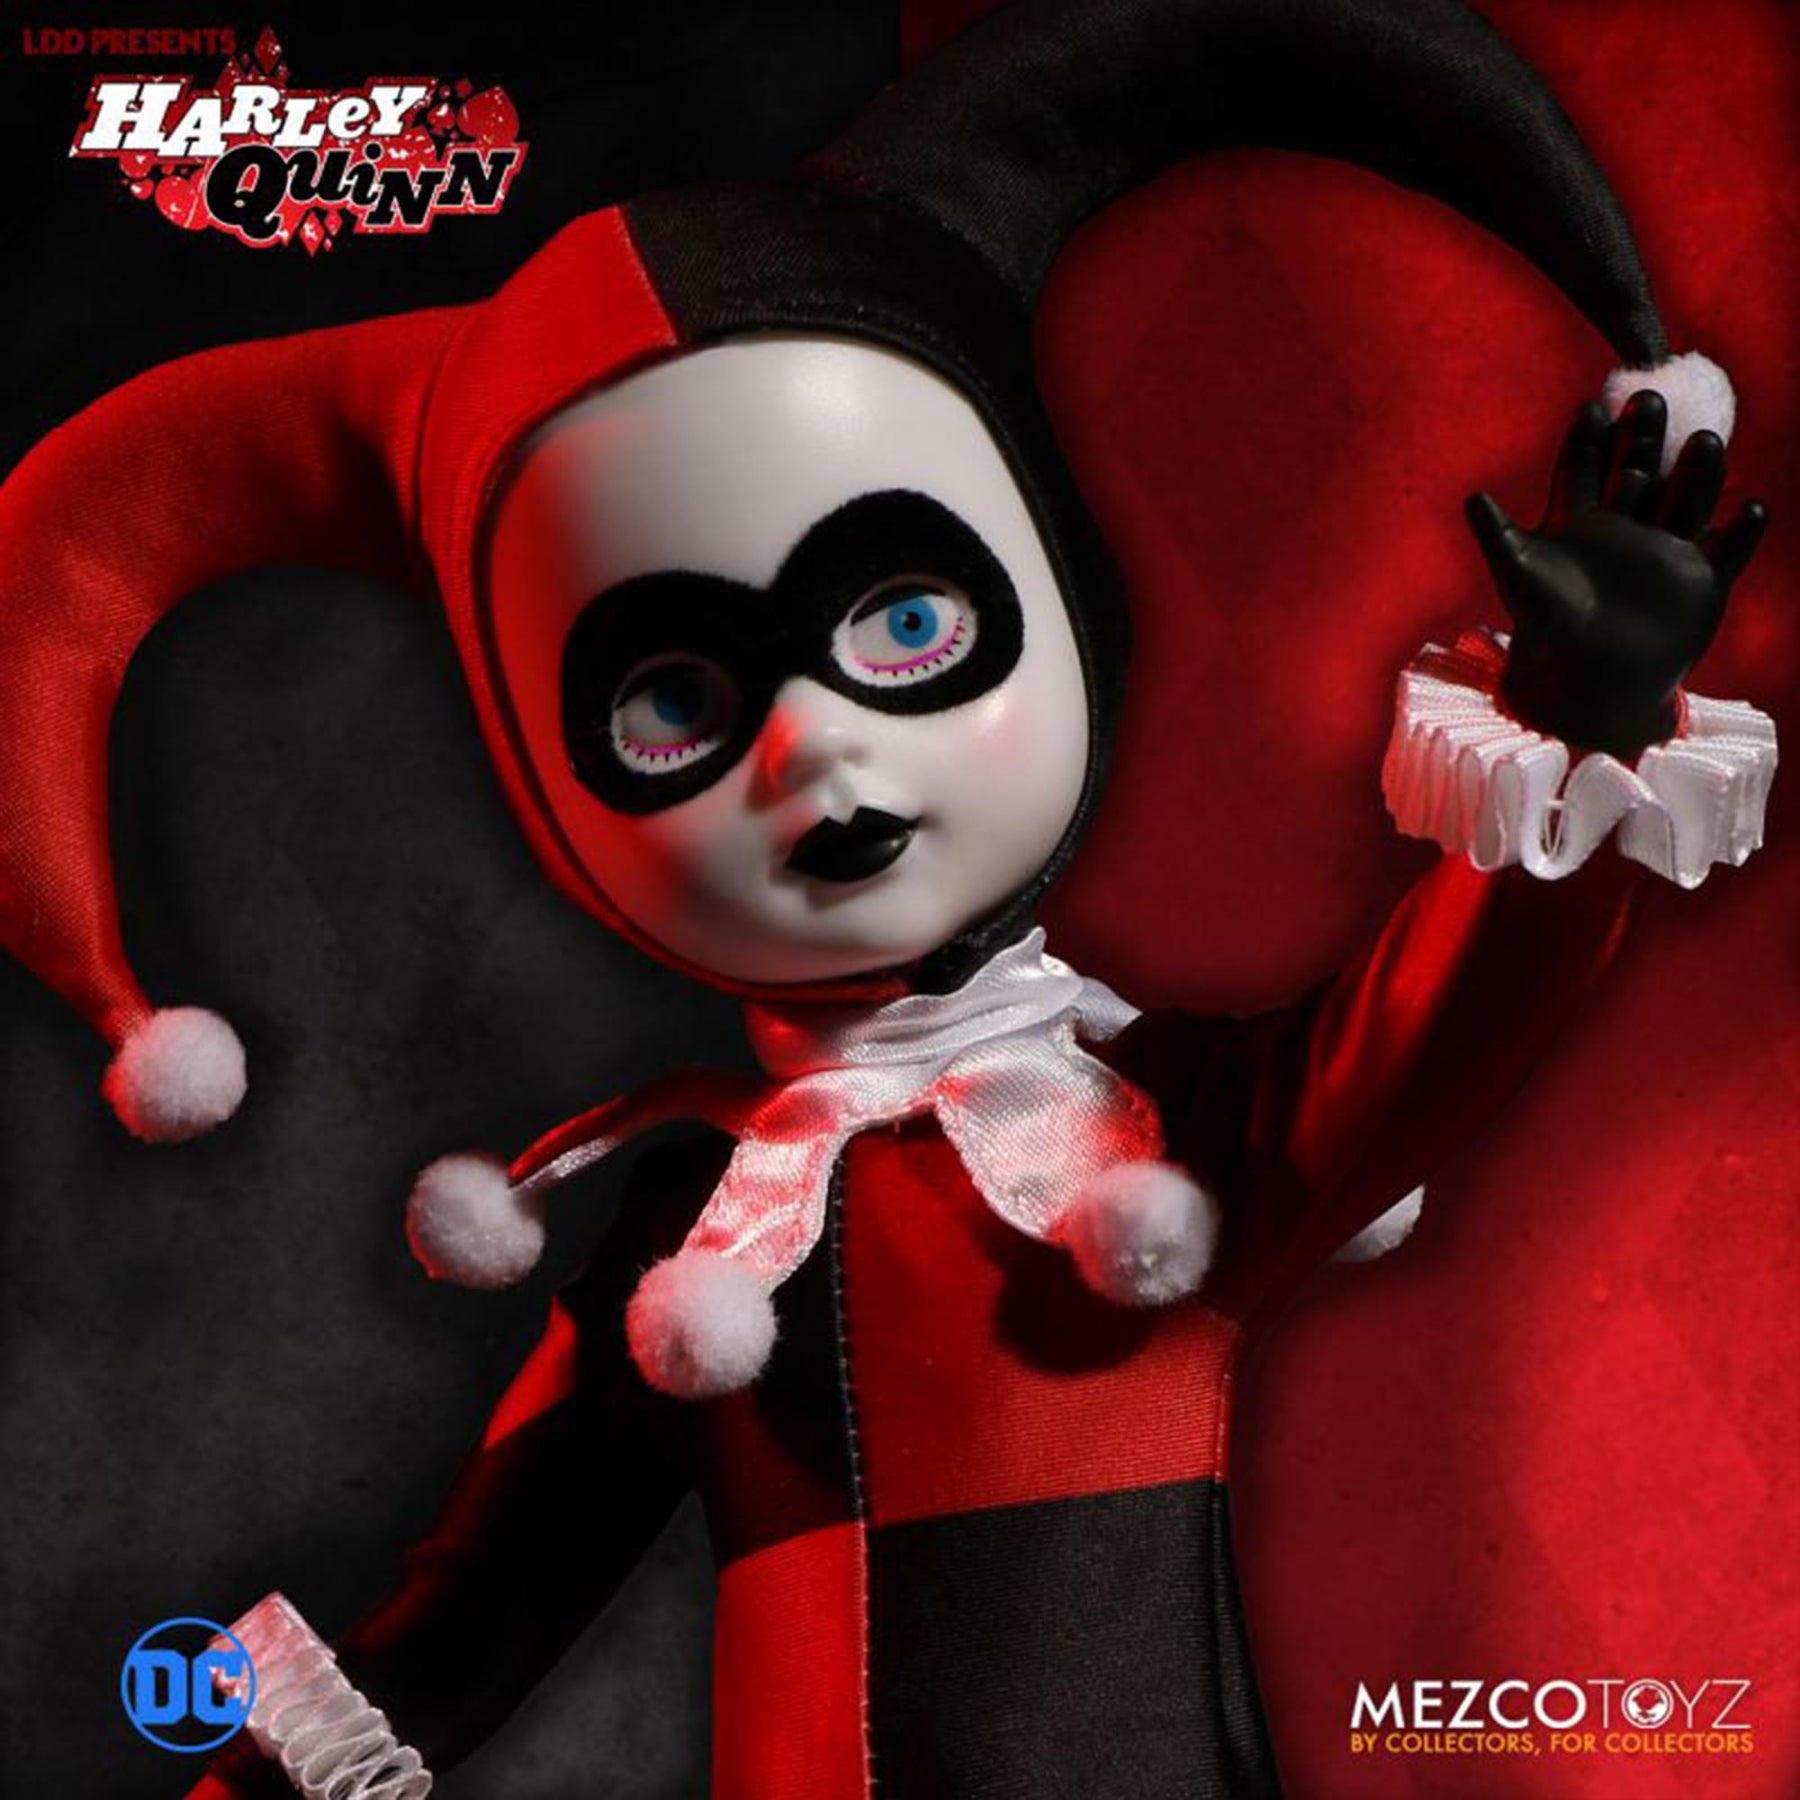 Mezco Toyz Living Dead Dolls Classic Harley Quinn Doll